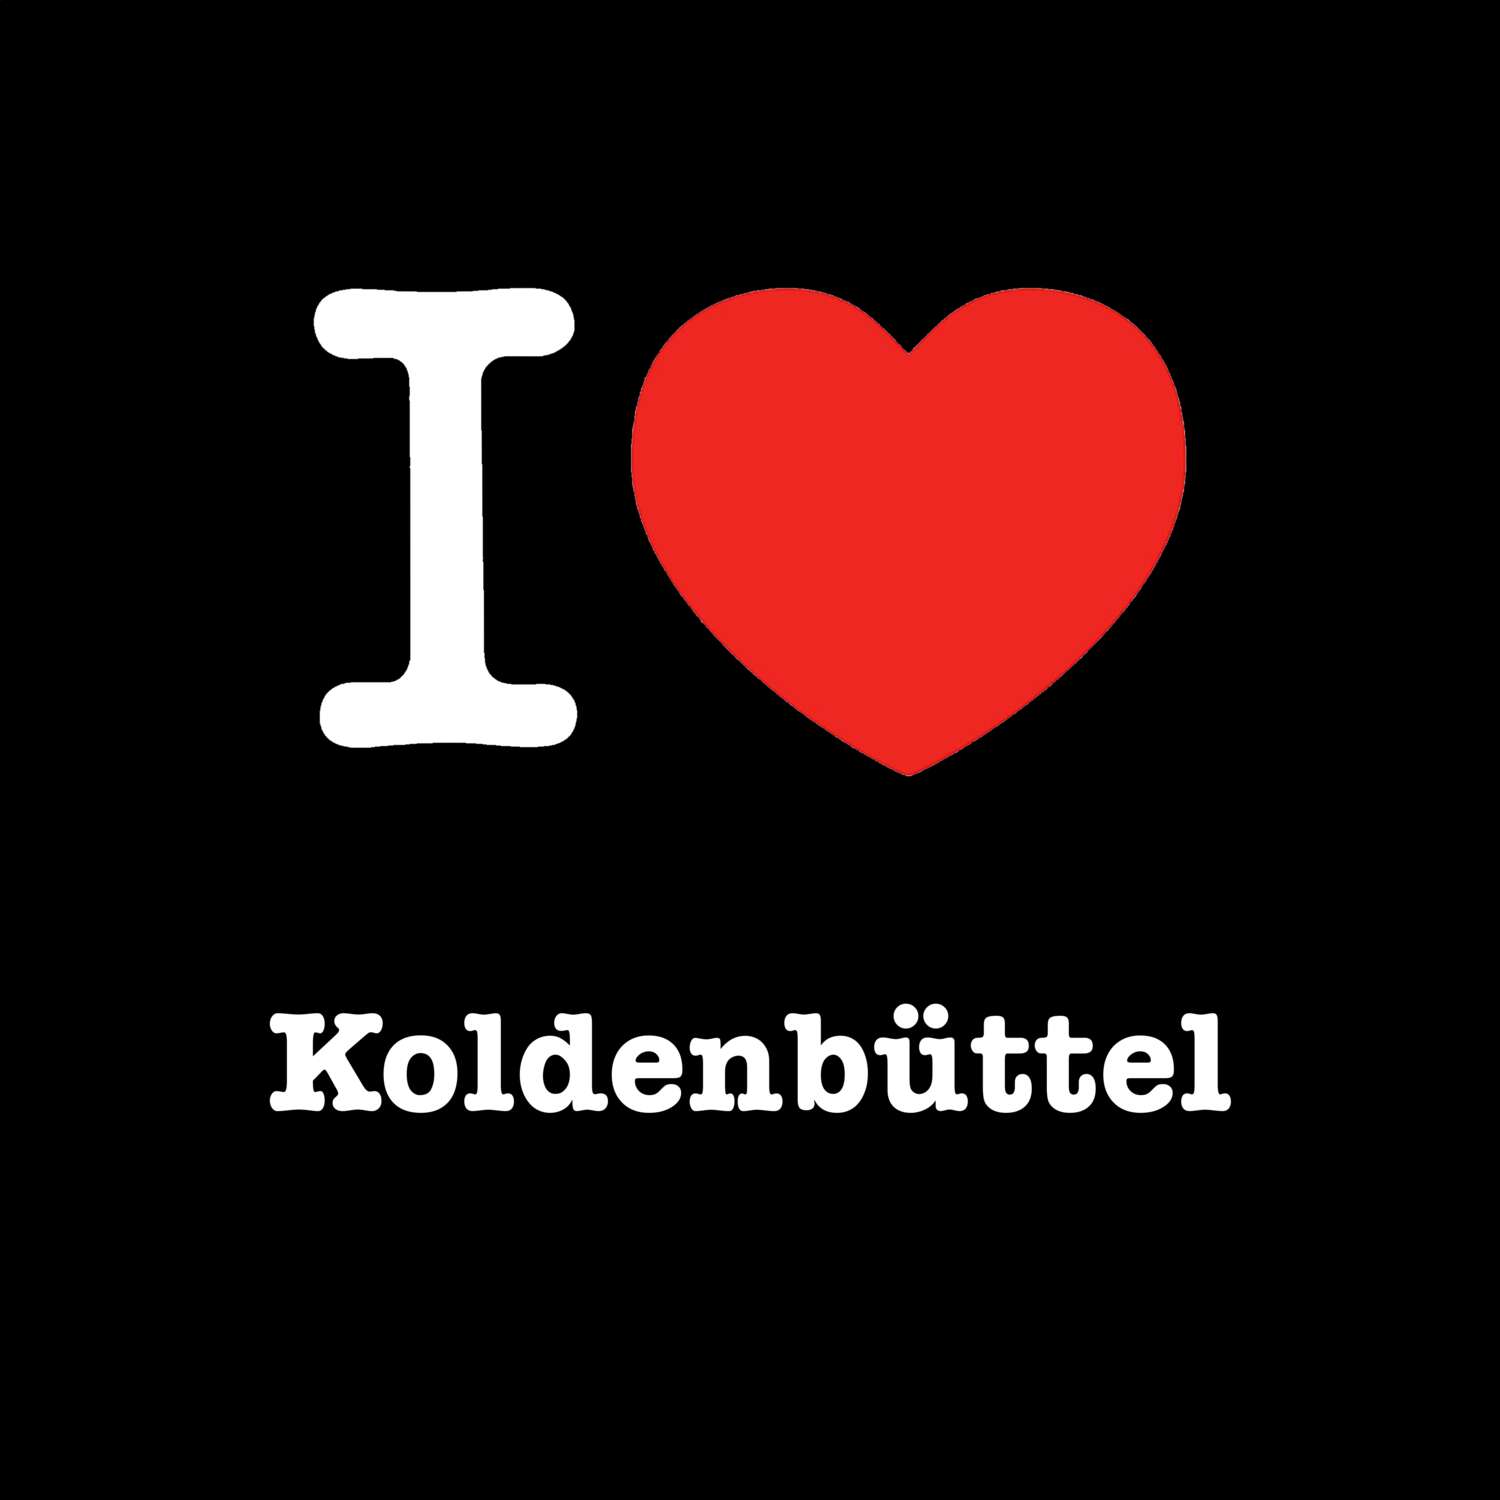 Koldenbüttel T-Shirt »I love«